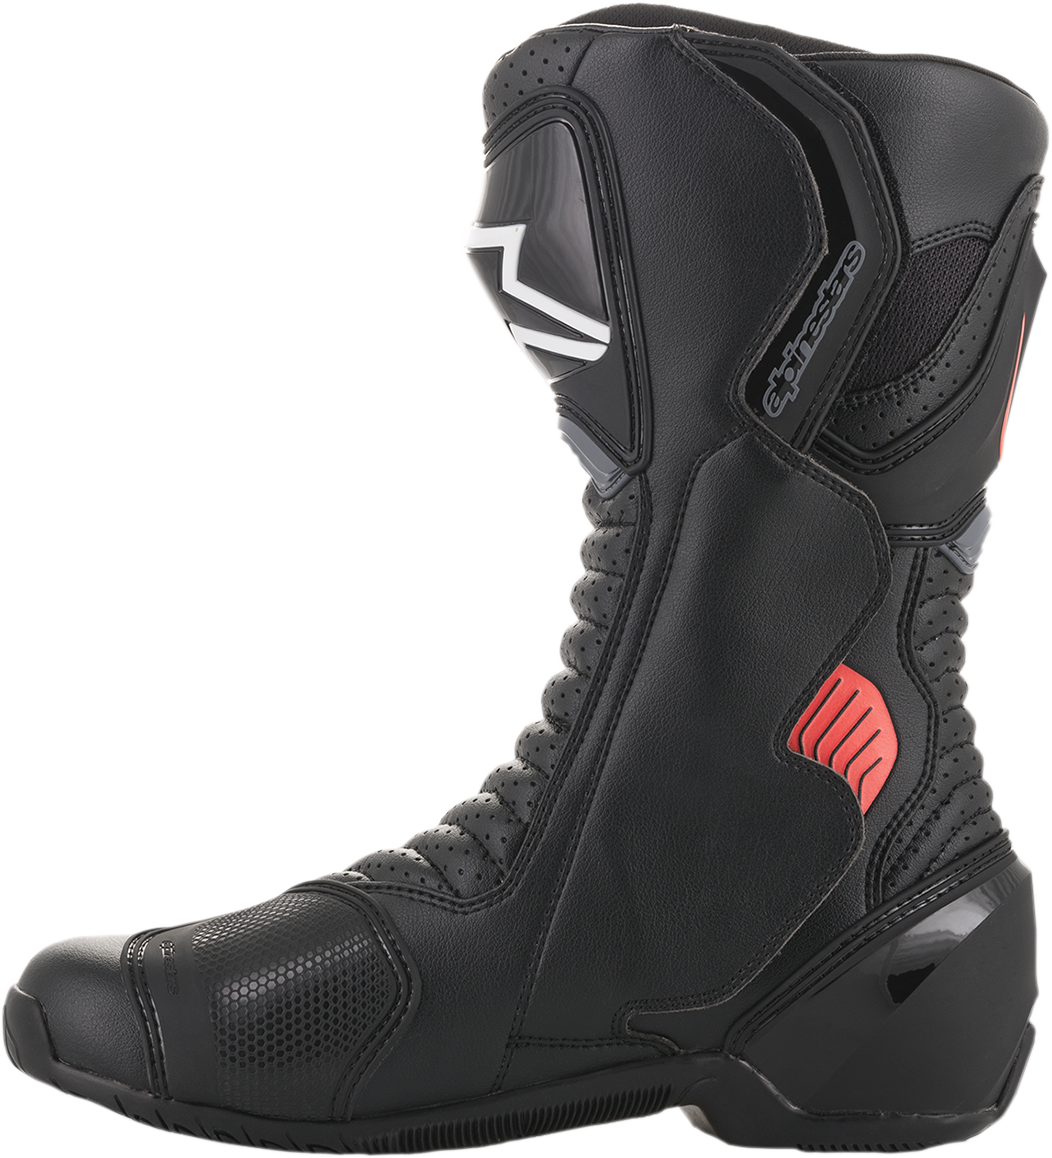 ALPINESTARS SMX-6 v2 Vented Boots - Black/Gray/Red - US 9 / EU 43 2223017-1133-43